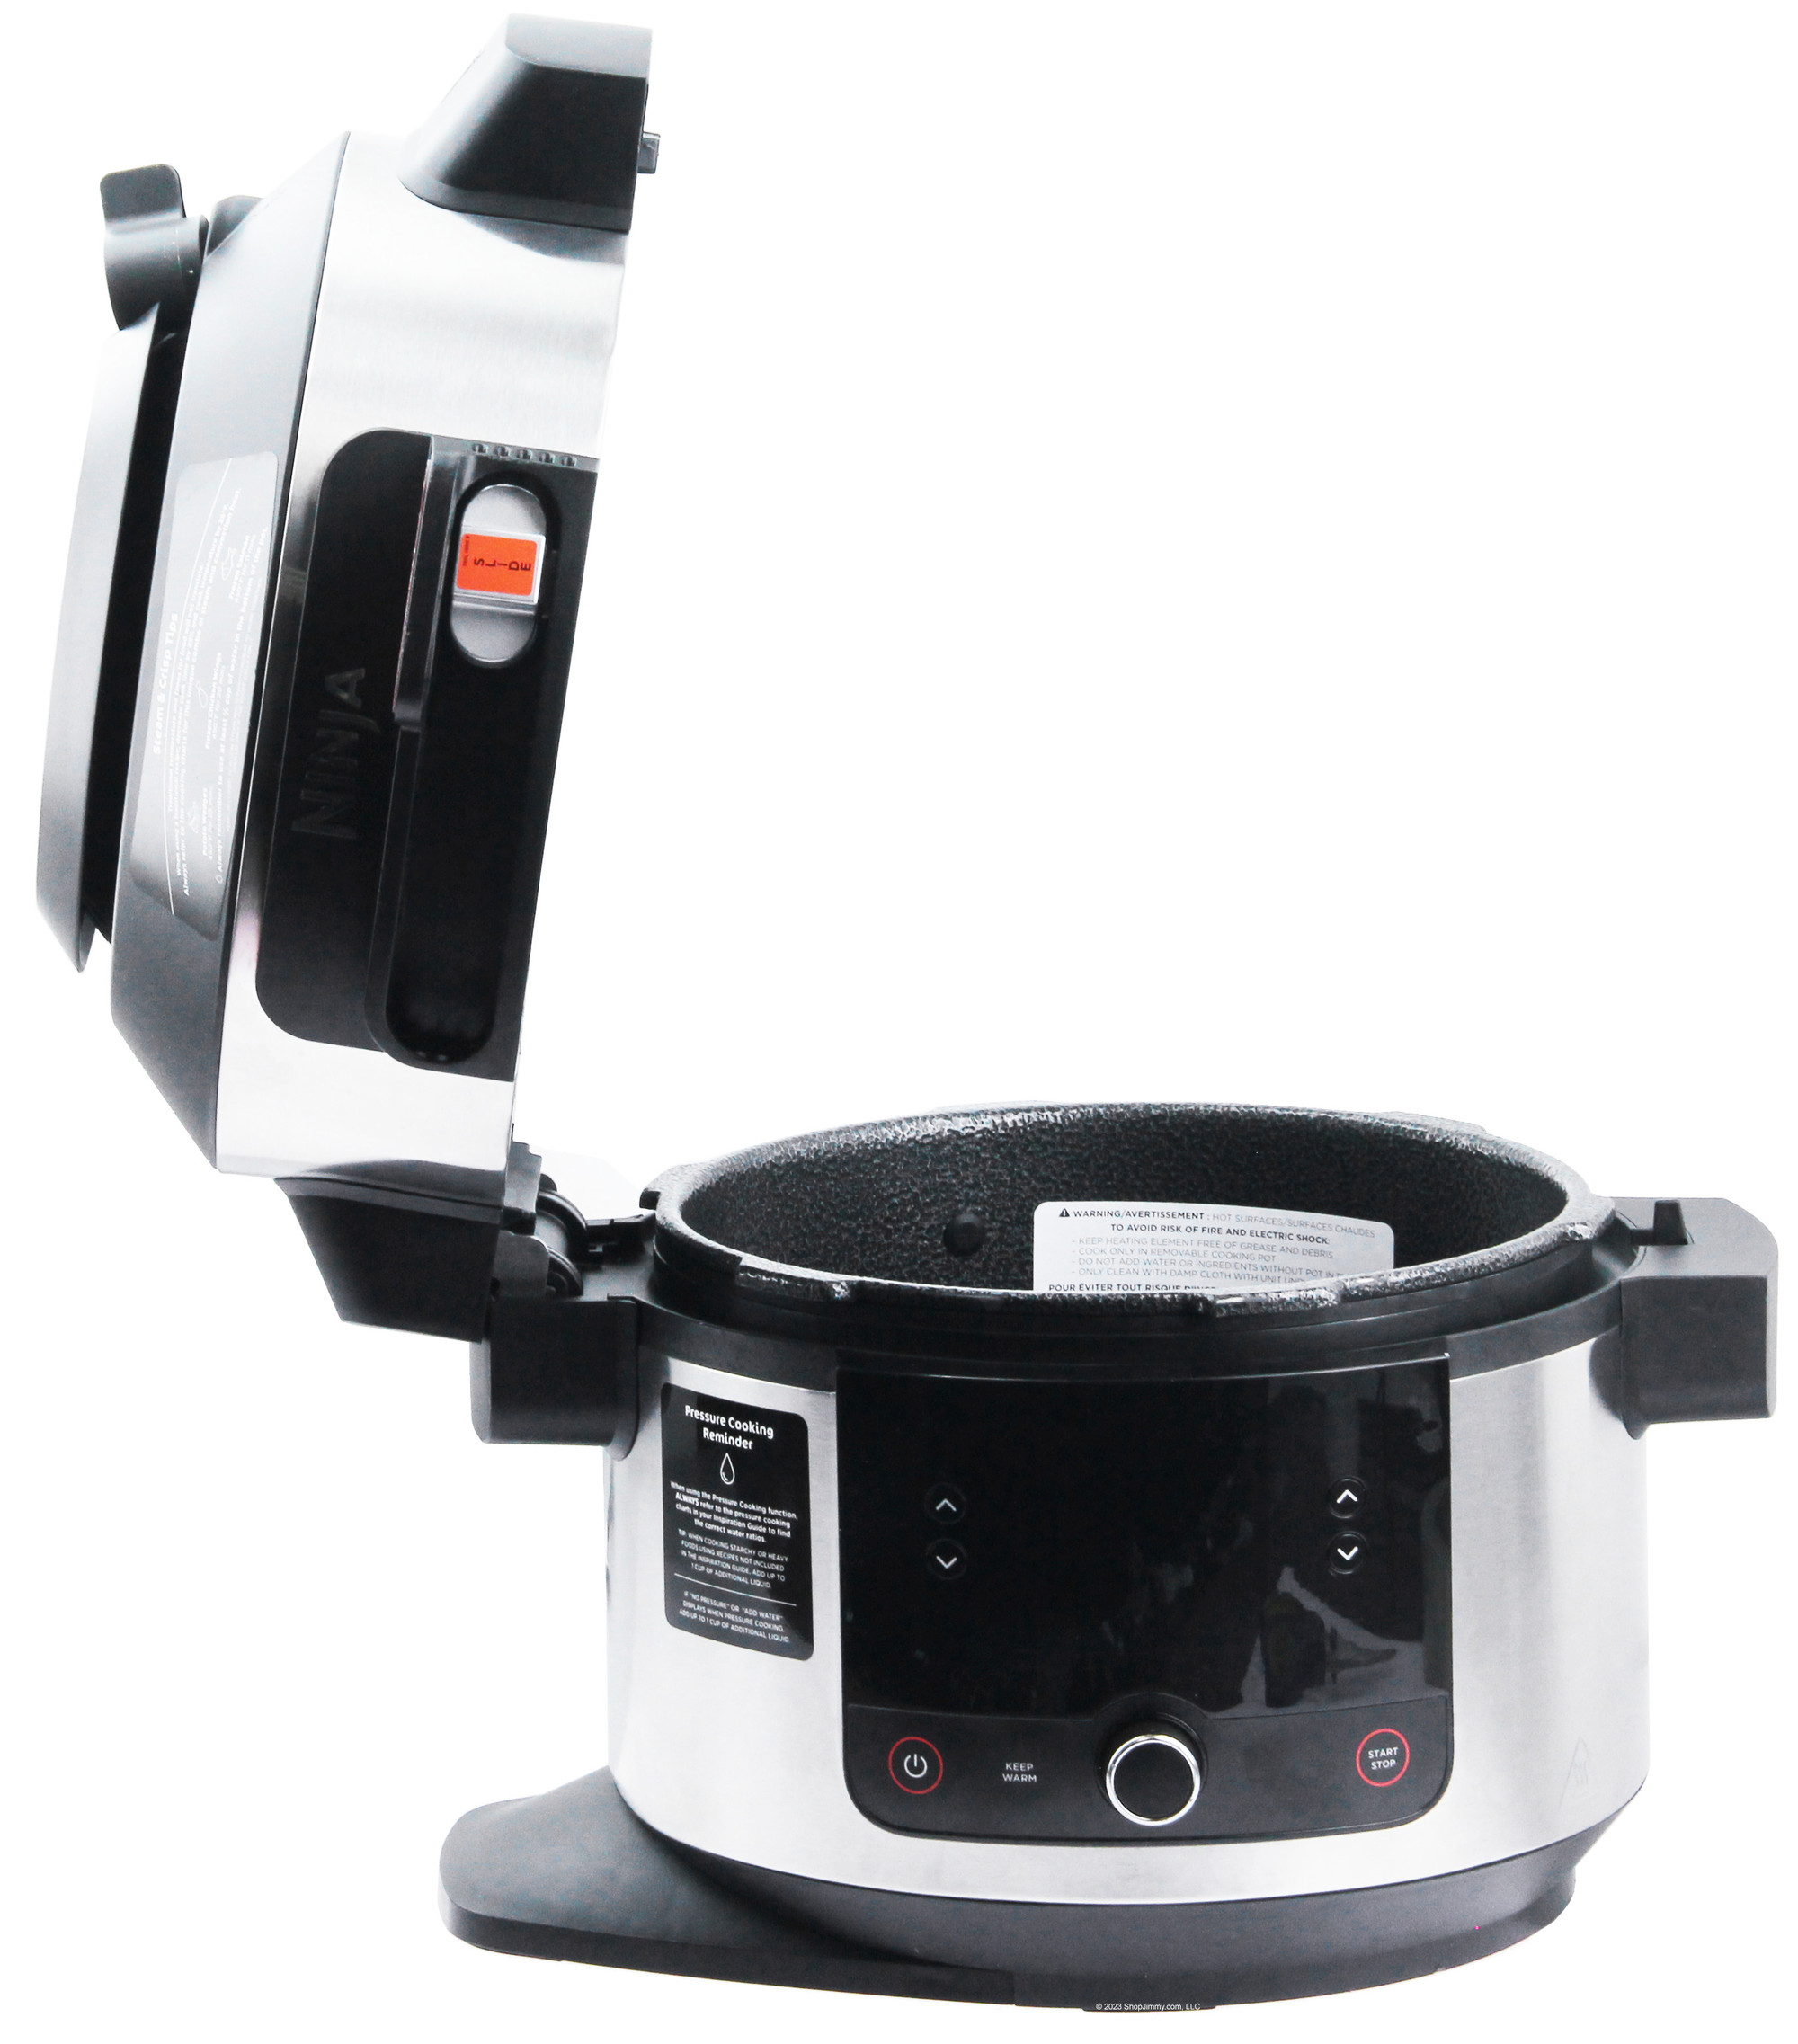 Ninja Foodi OL501 Pressure Cooker Steam Fryer with SmartLid Replacement Base